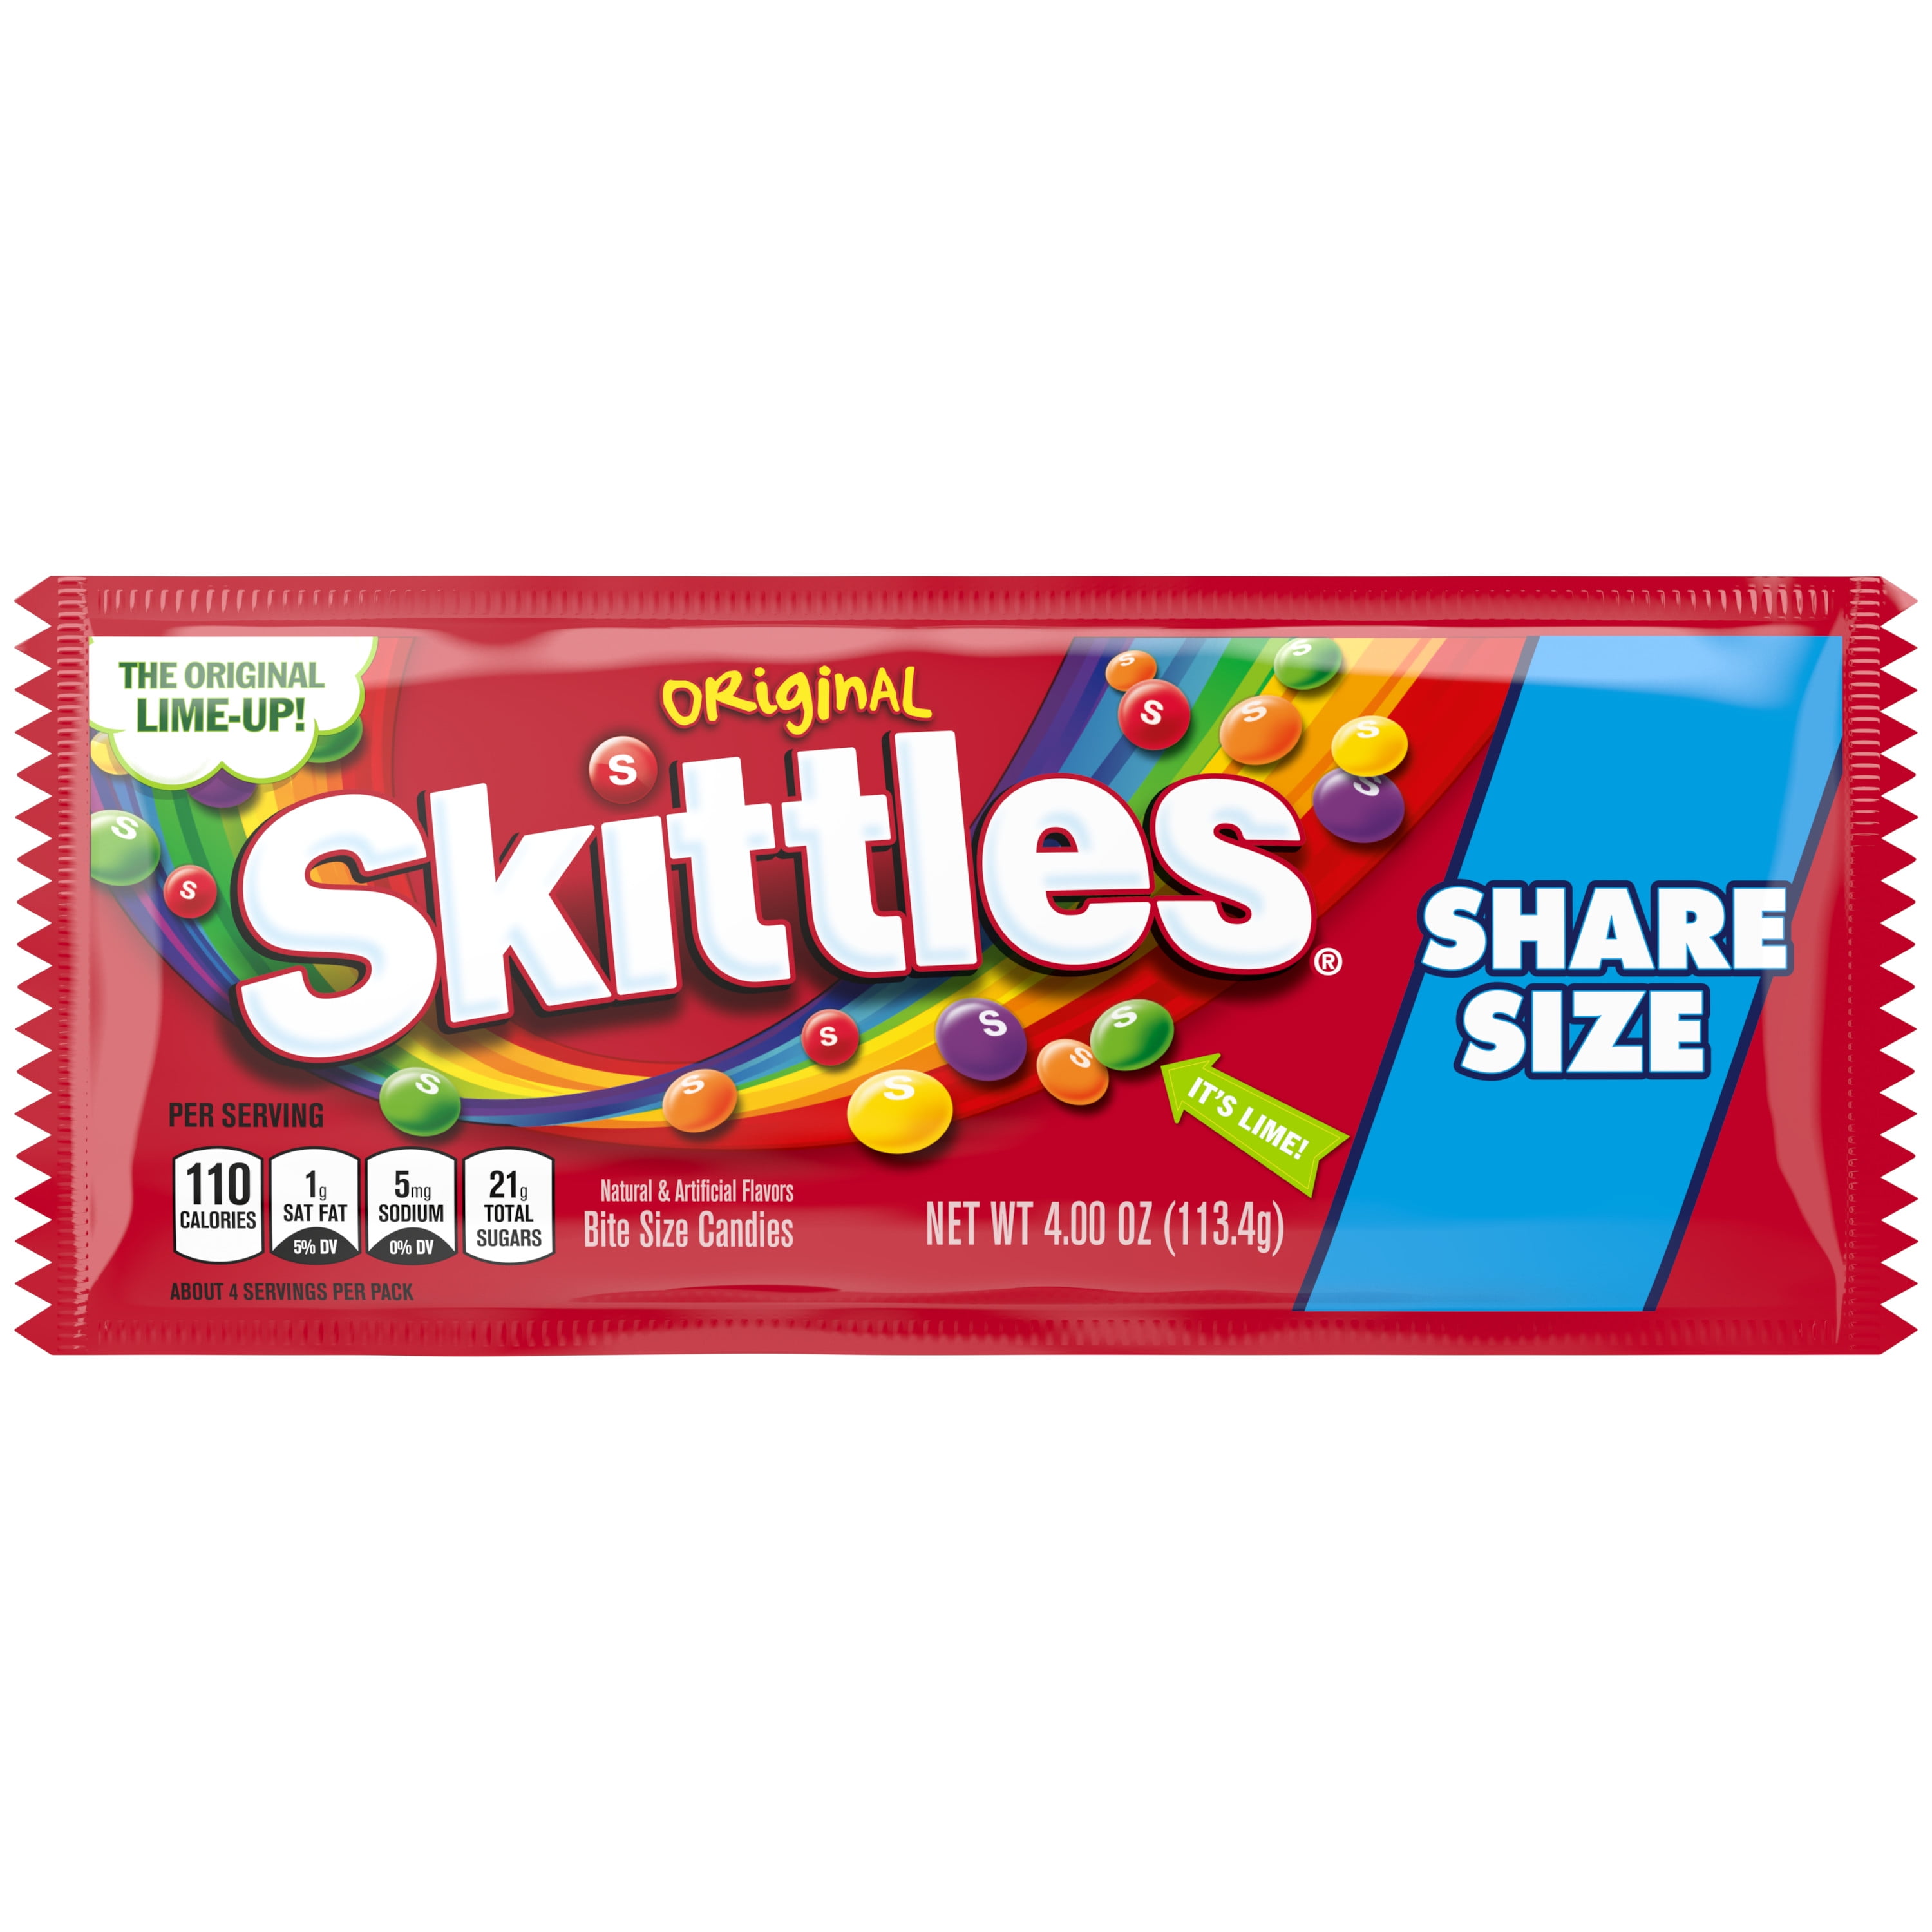 SKITTLES Original Fruity Candy Share Size, 4 oz. Bag